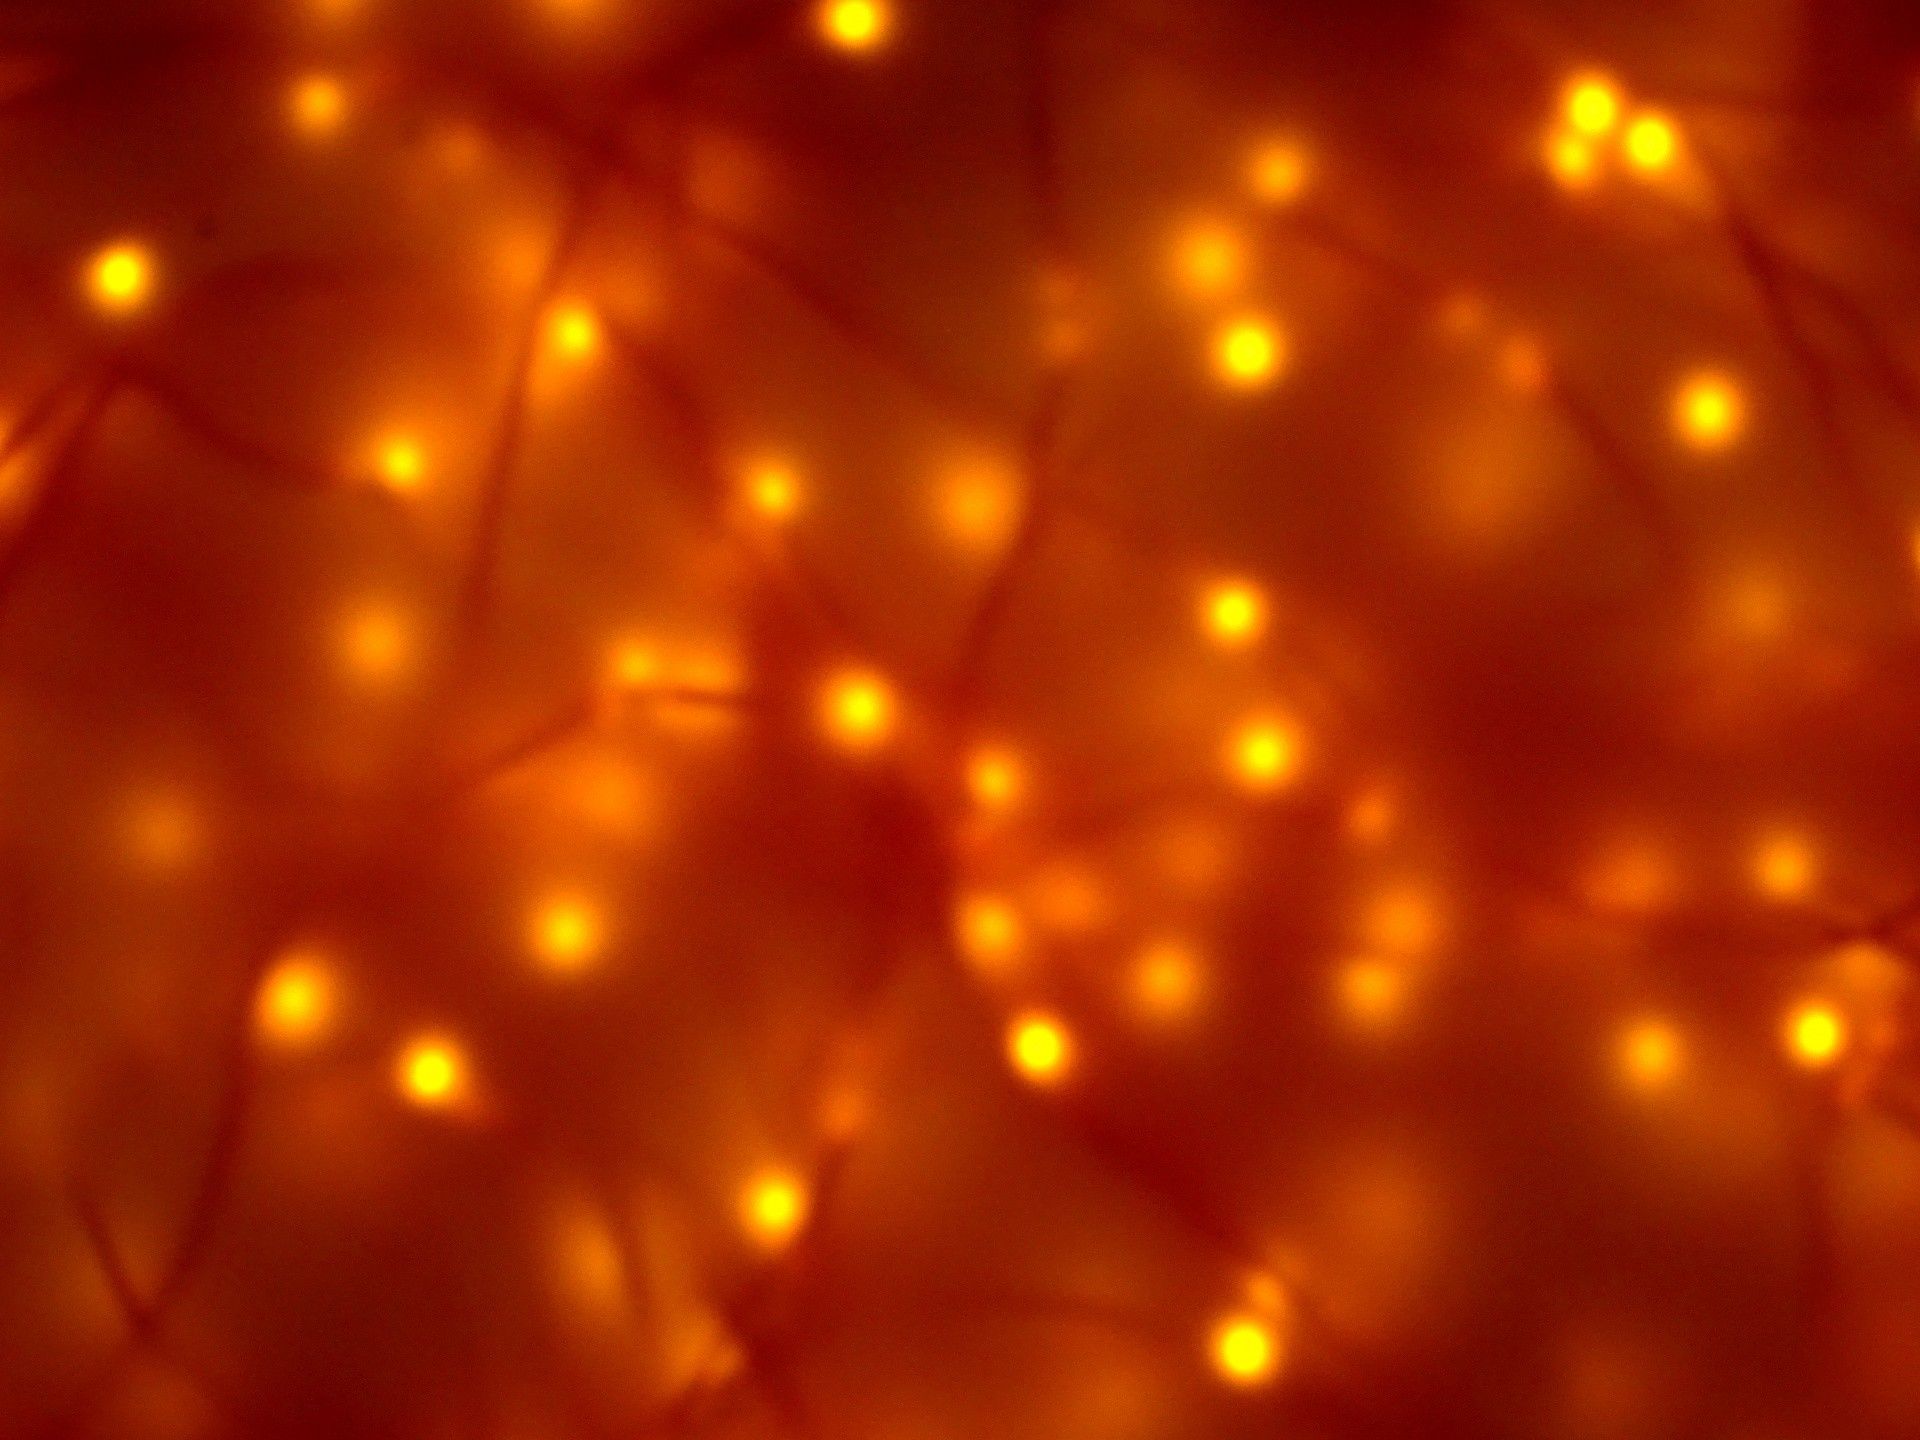 A close up of some orange lights - Neon orange